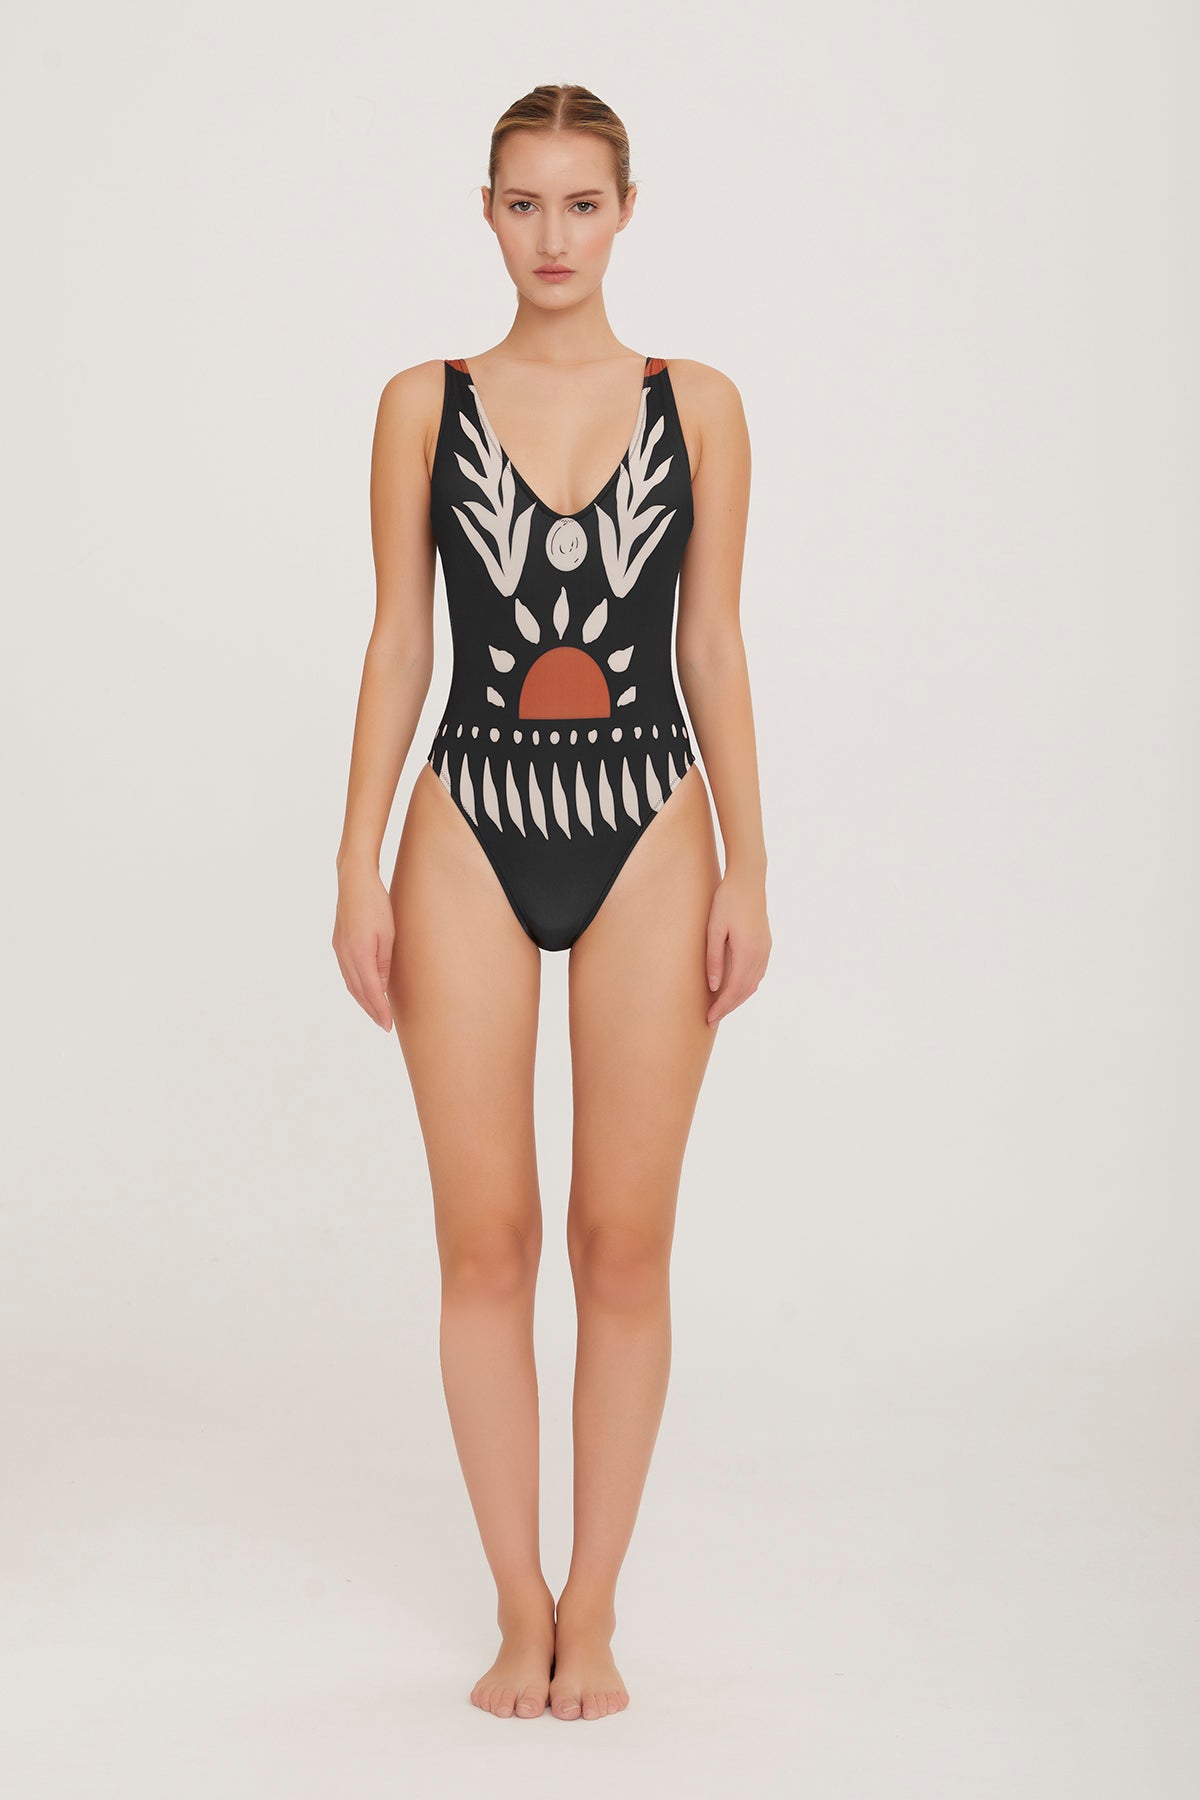 Lapieno Onepiece Swimsuit-3574 Voile Fashion